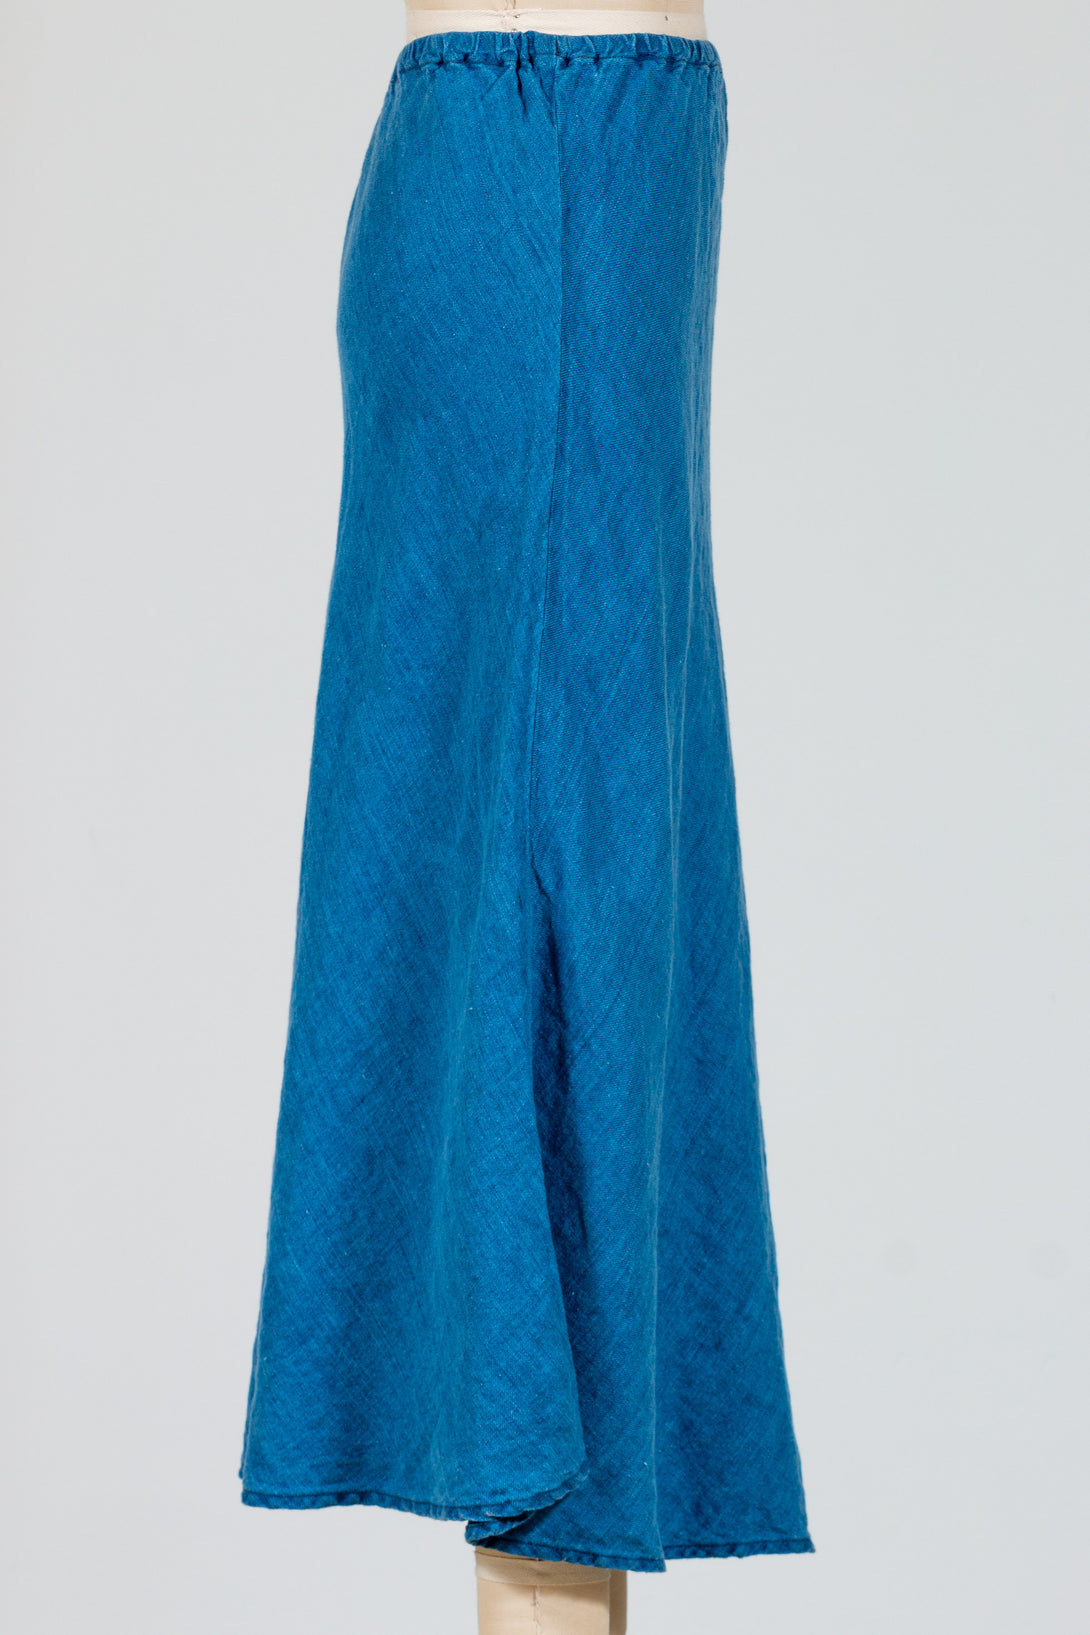 CPShades-Tanya-Skirt-Indigo-Blue-Linen